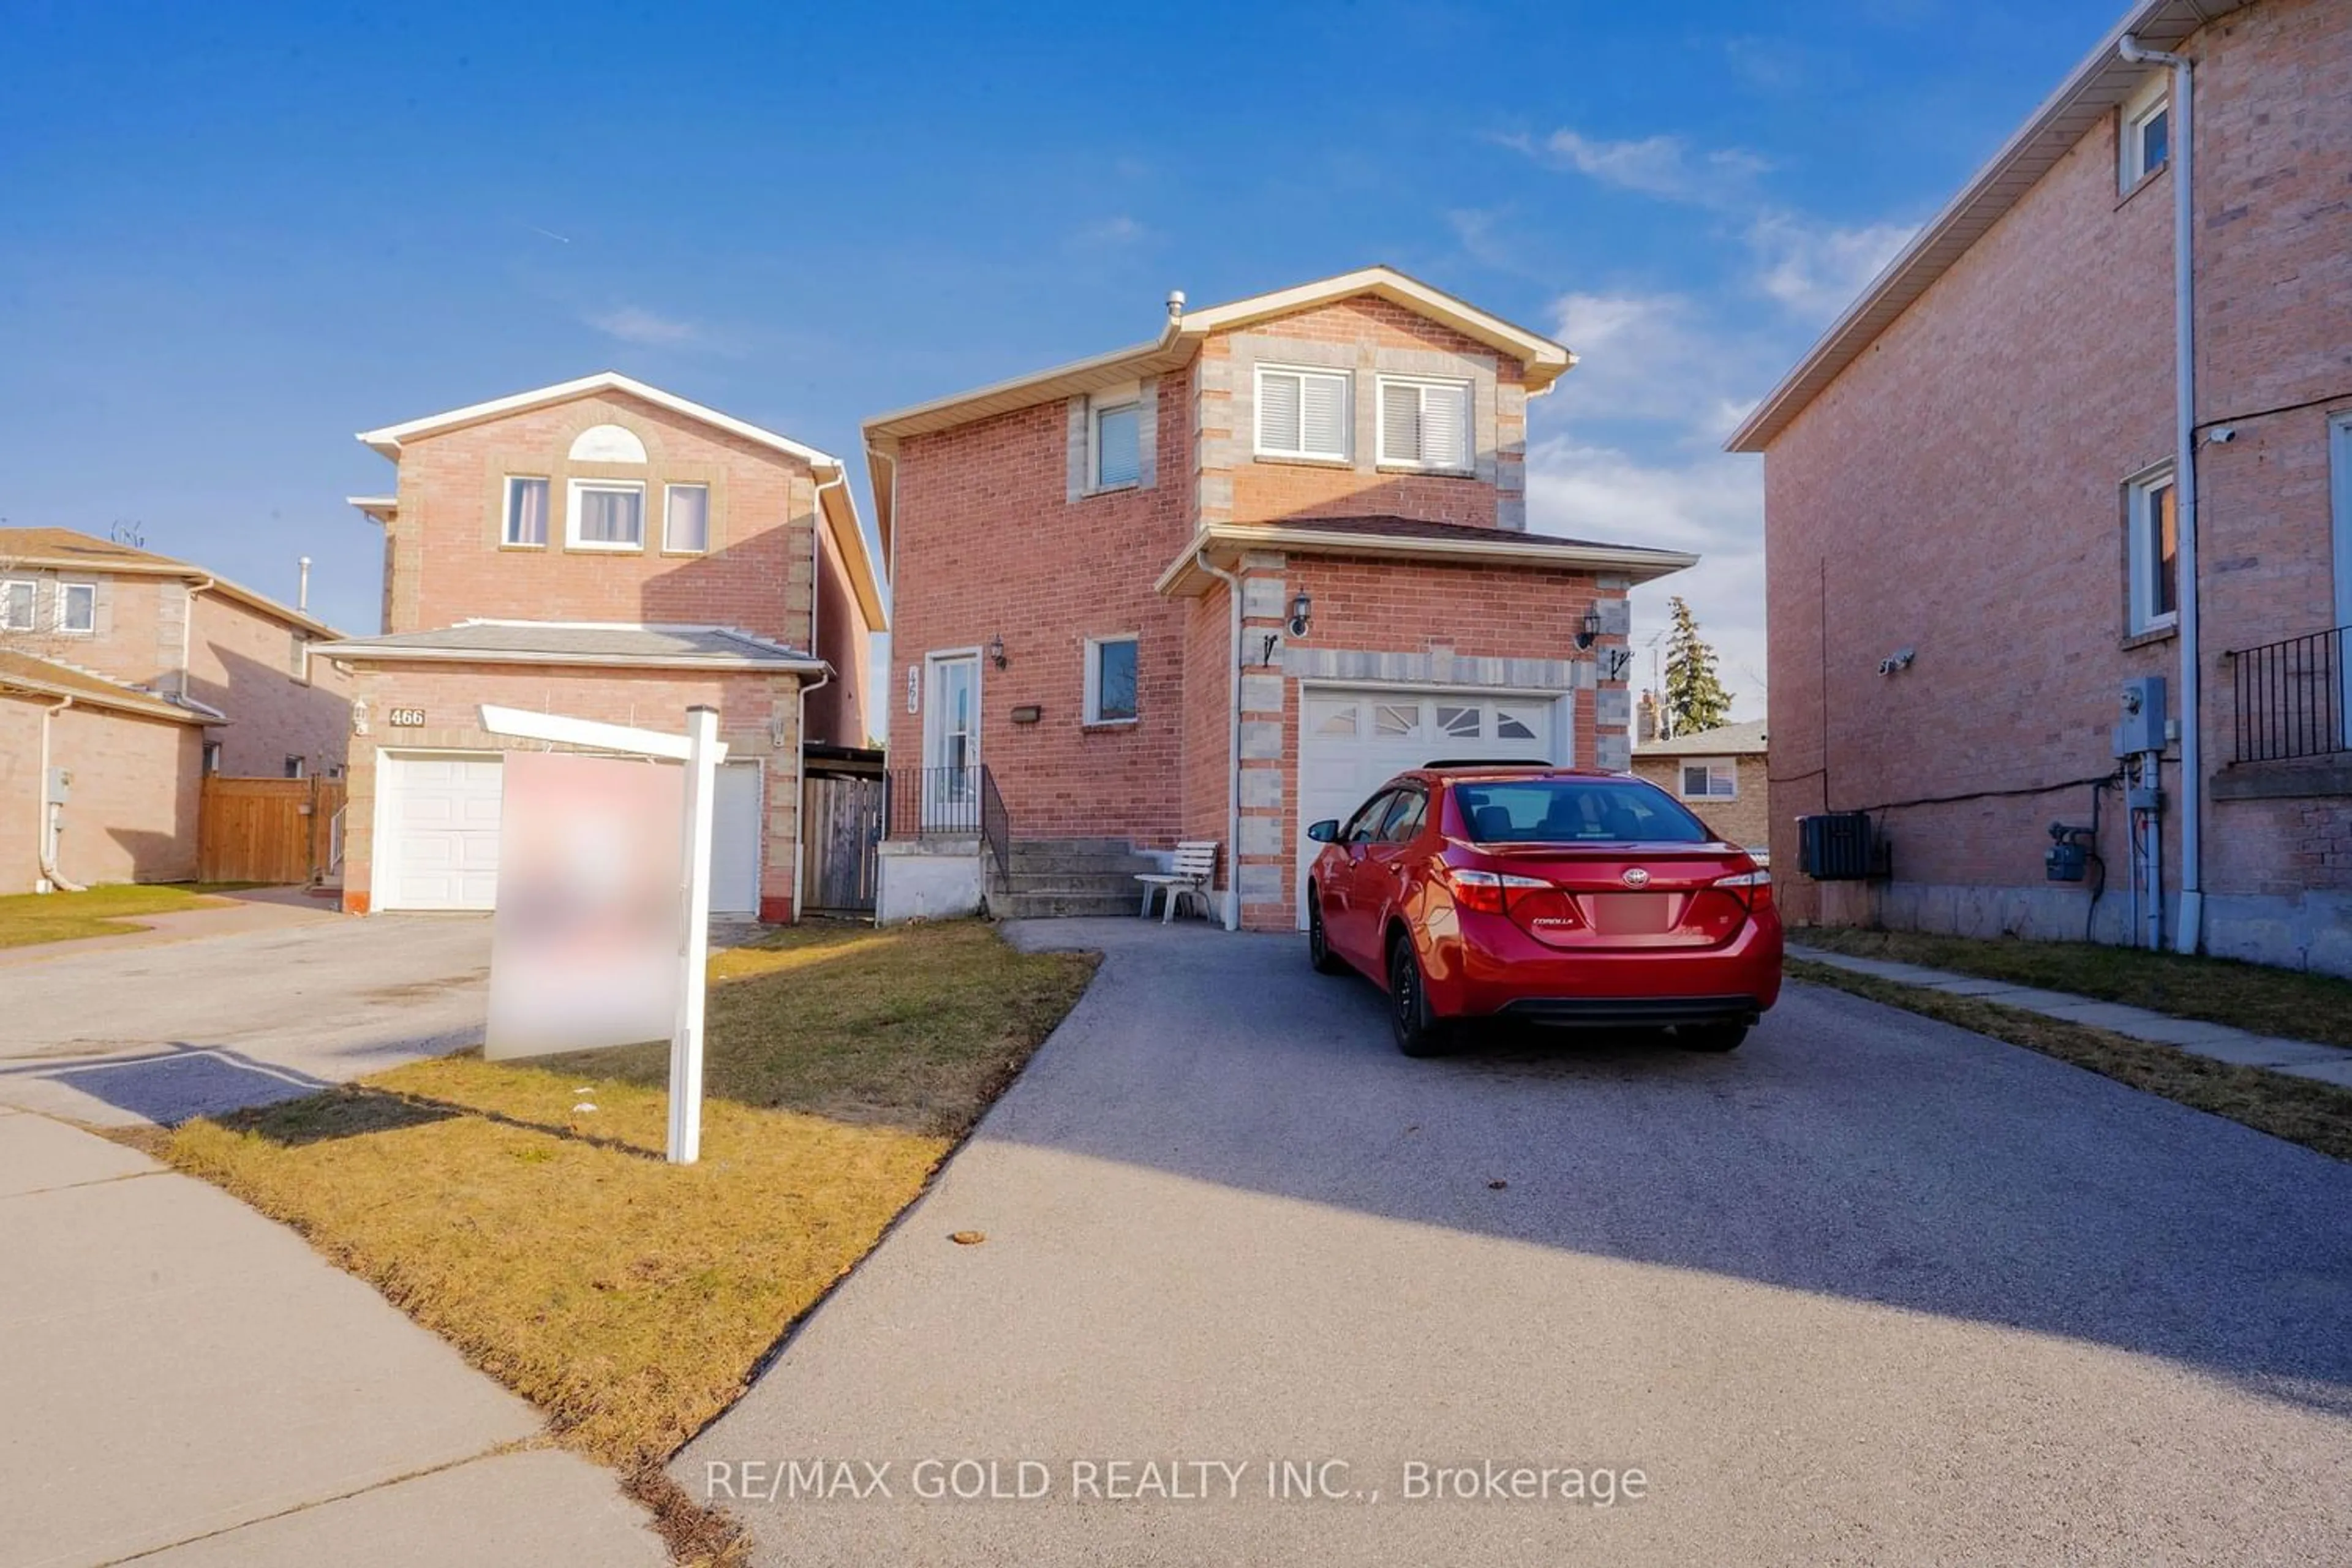 Frontside or backside of a home for 464 Hansen Rd, Brampton Ontario L6V 3P8